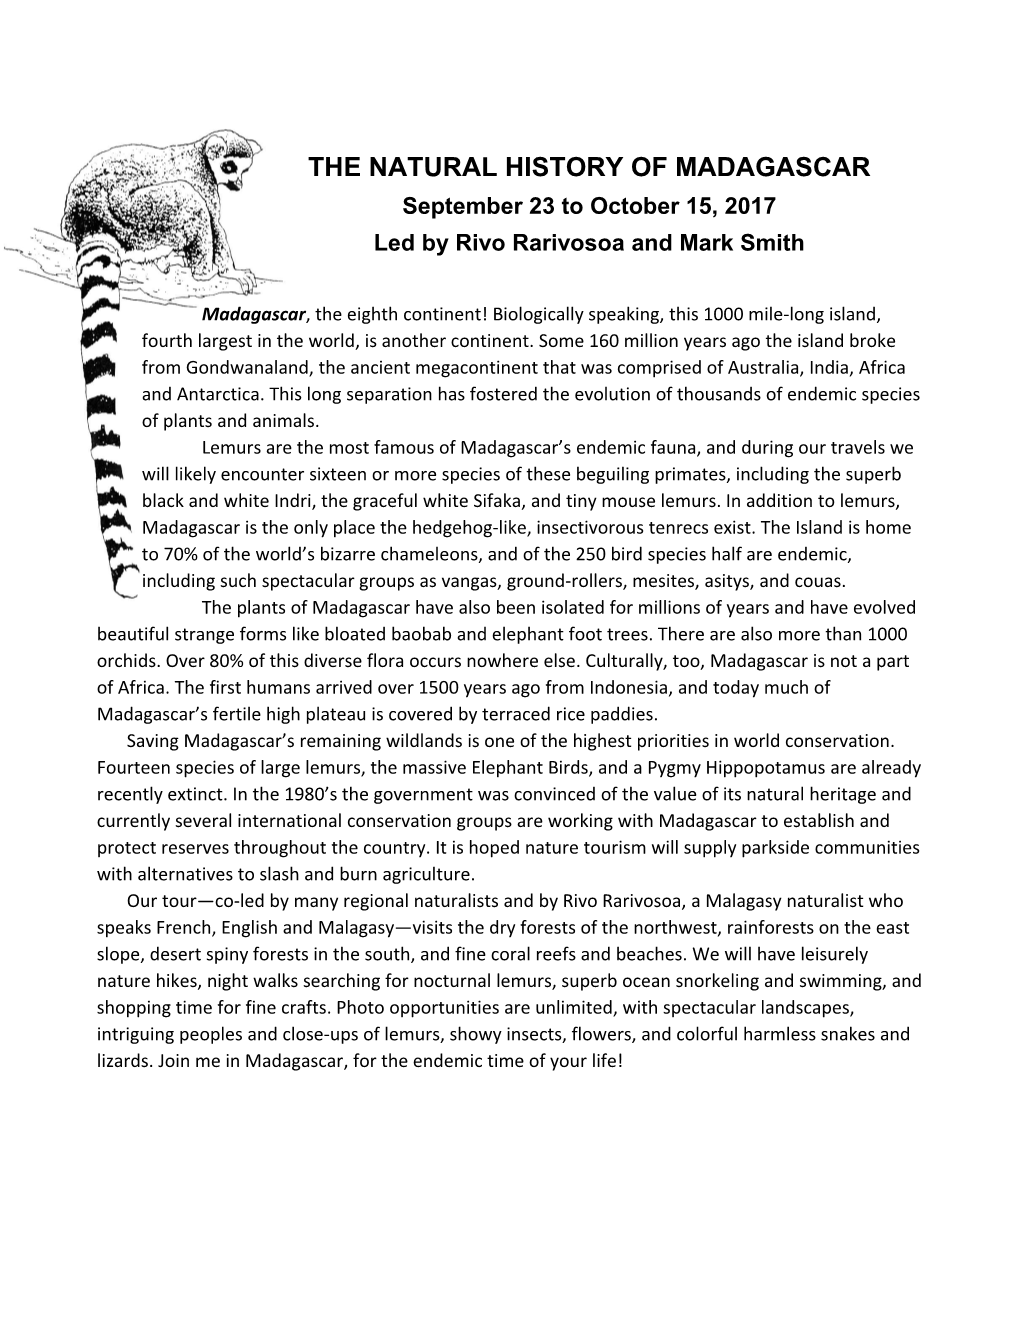 The Natural History of Madagascar